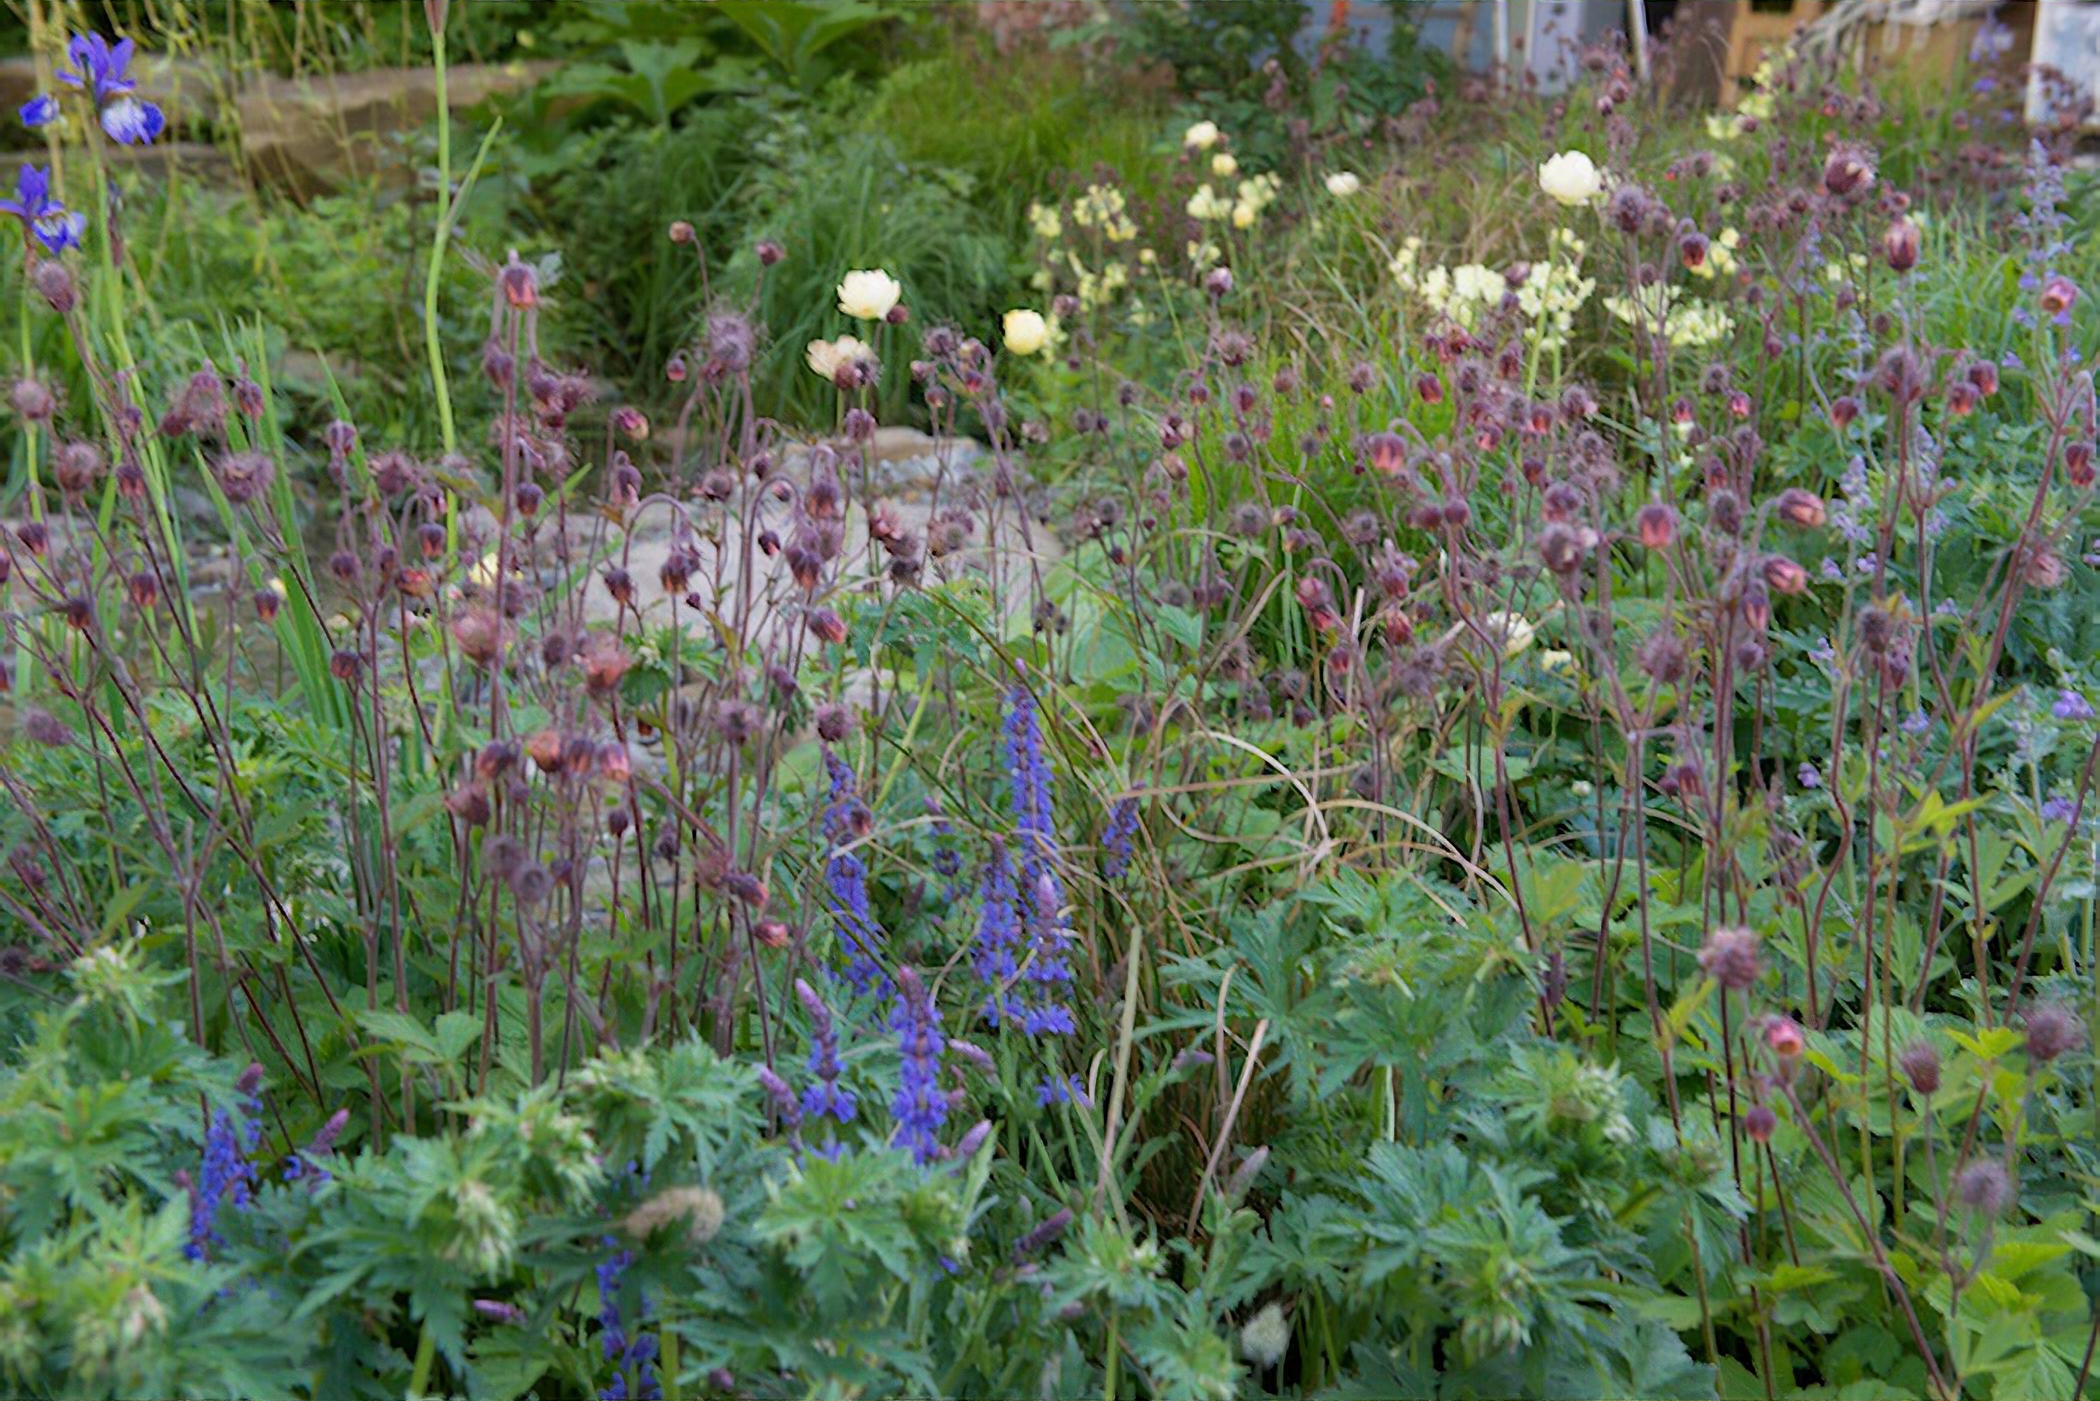 The Wedgwood Garden Chelsea Flower Show 2018 by London and Sussex based garden designer Jo Thompson